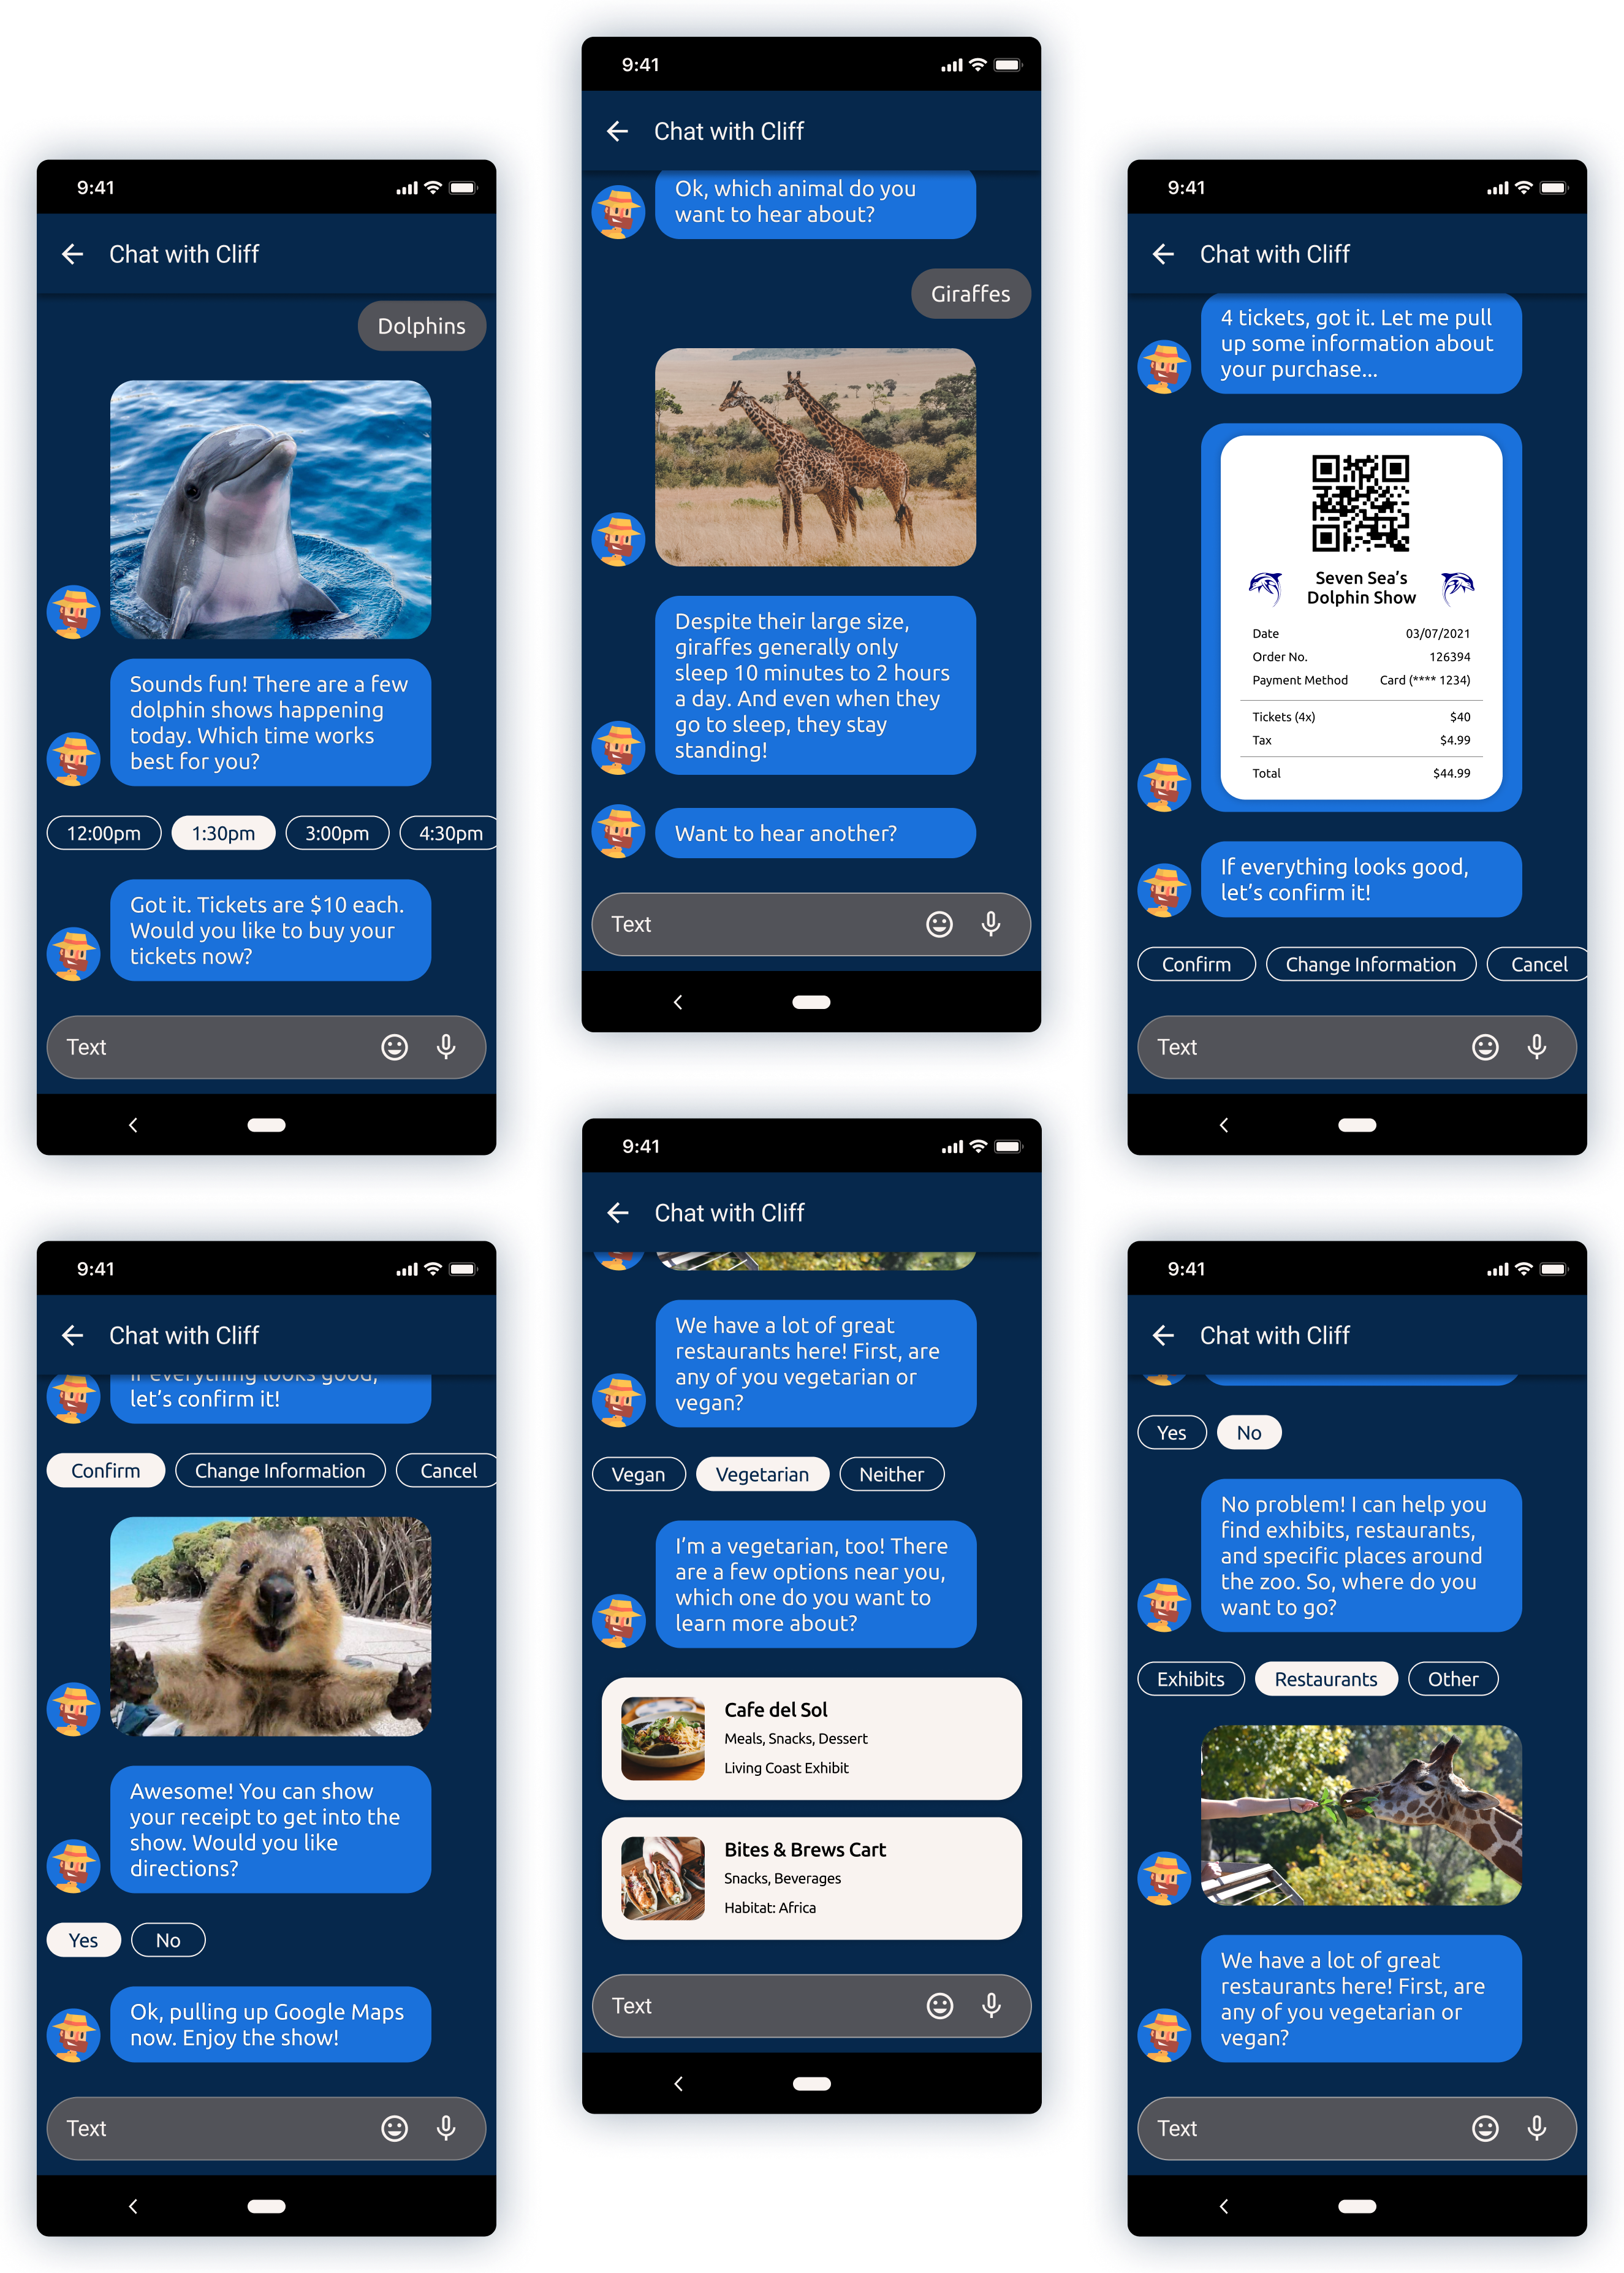 Hi-Fi mockups of multiple screens showing Cliff's conversations